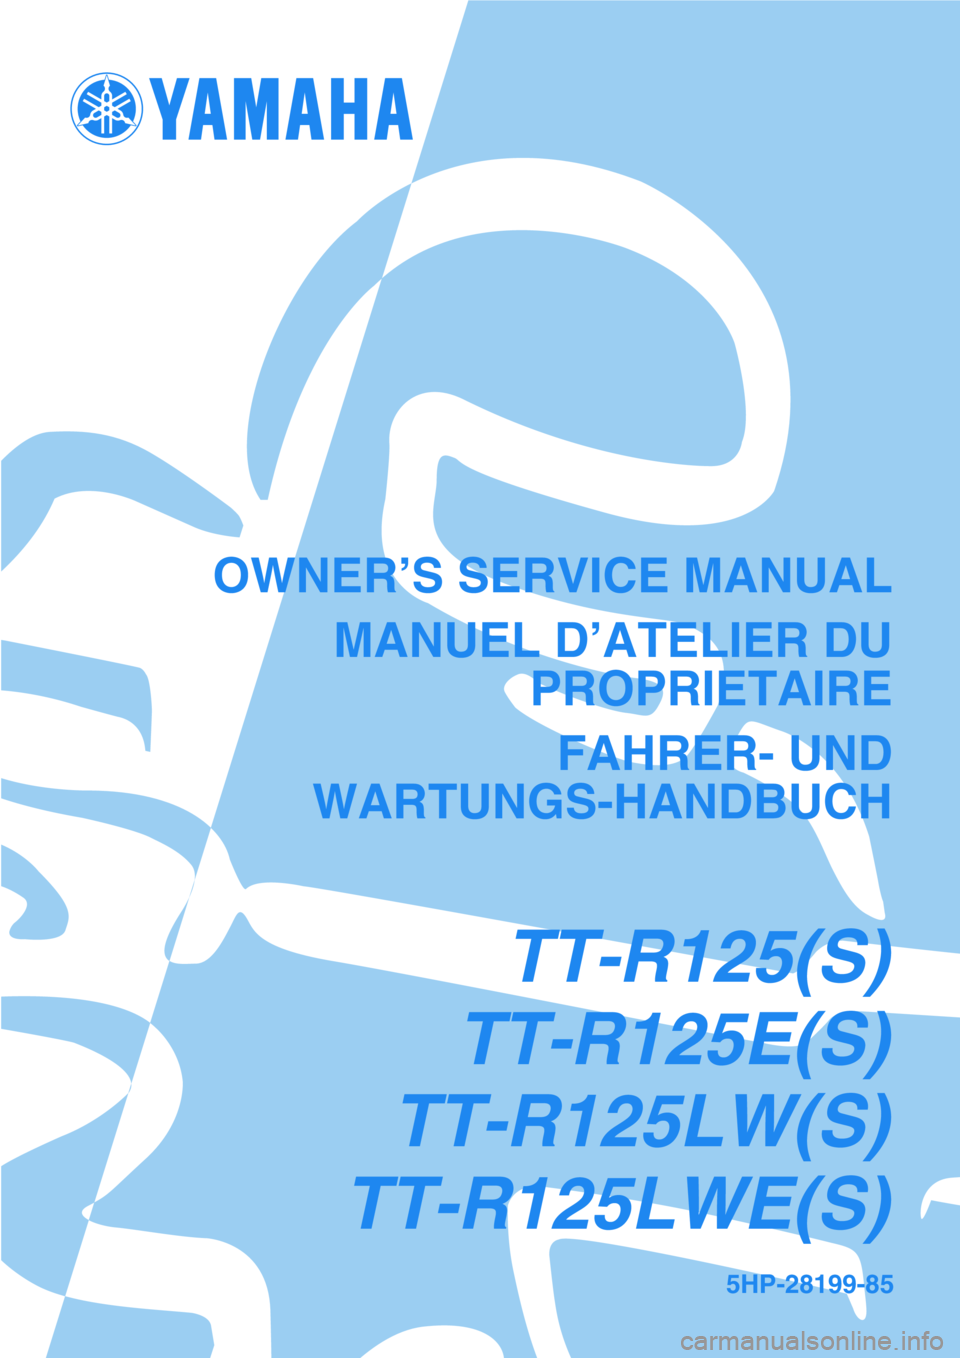 YAMAHA TTR125 2004  Owners Manual 5HP-28199-85
OWNER’S SERVICE MANUAL
MANUEL D’ATELIER DU
PROPRIETAIRE
FAHRER- UND
WARTUNGS-HANDBUCH
TT-R125(S)
TT-R125E(S)
TT-R125LW(S)
TT-R125LWE(S) 